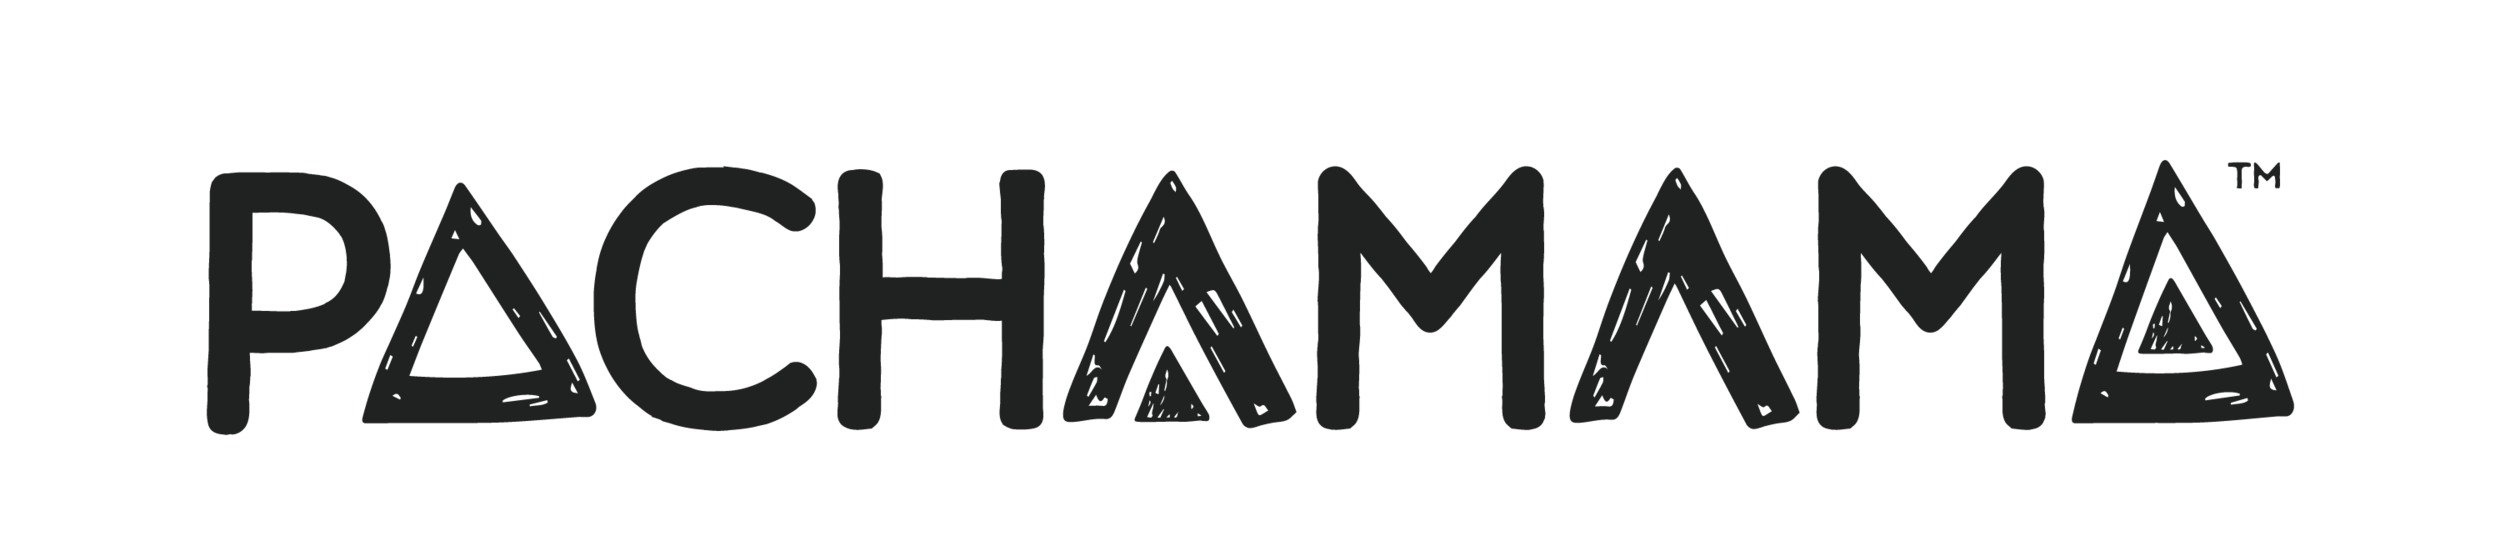 Pachamama_Logo_Black-01 (1).png